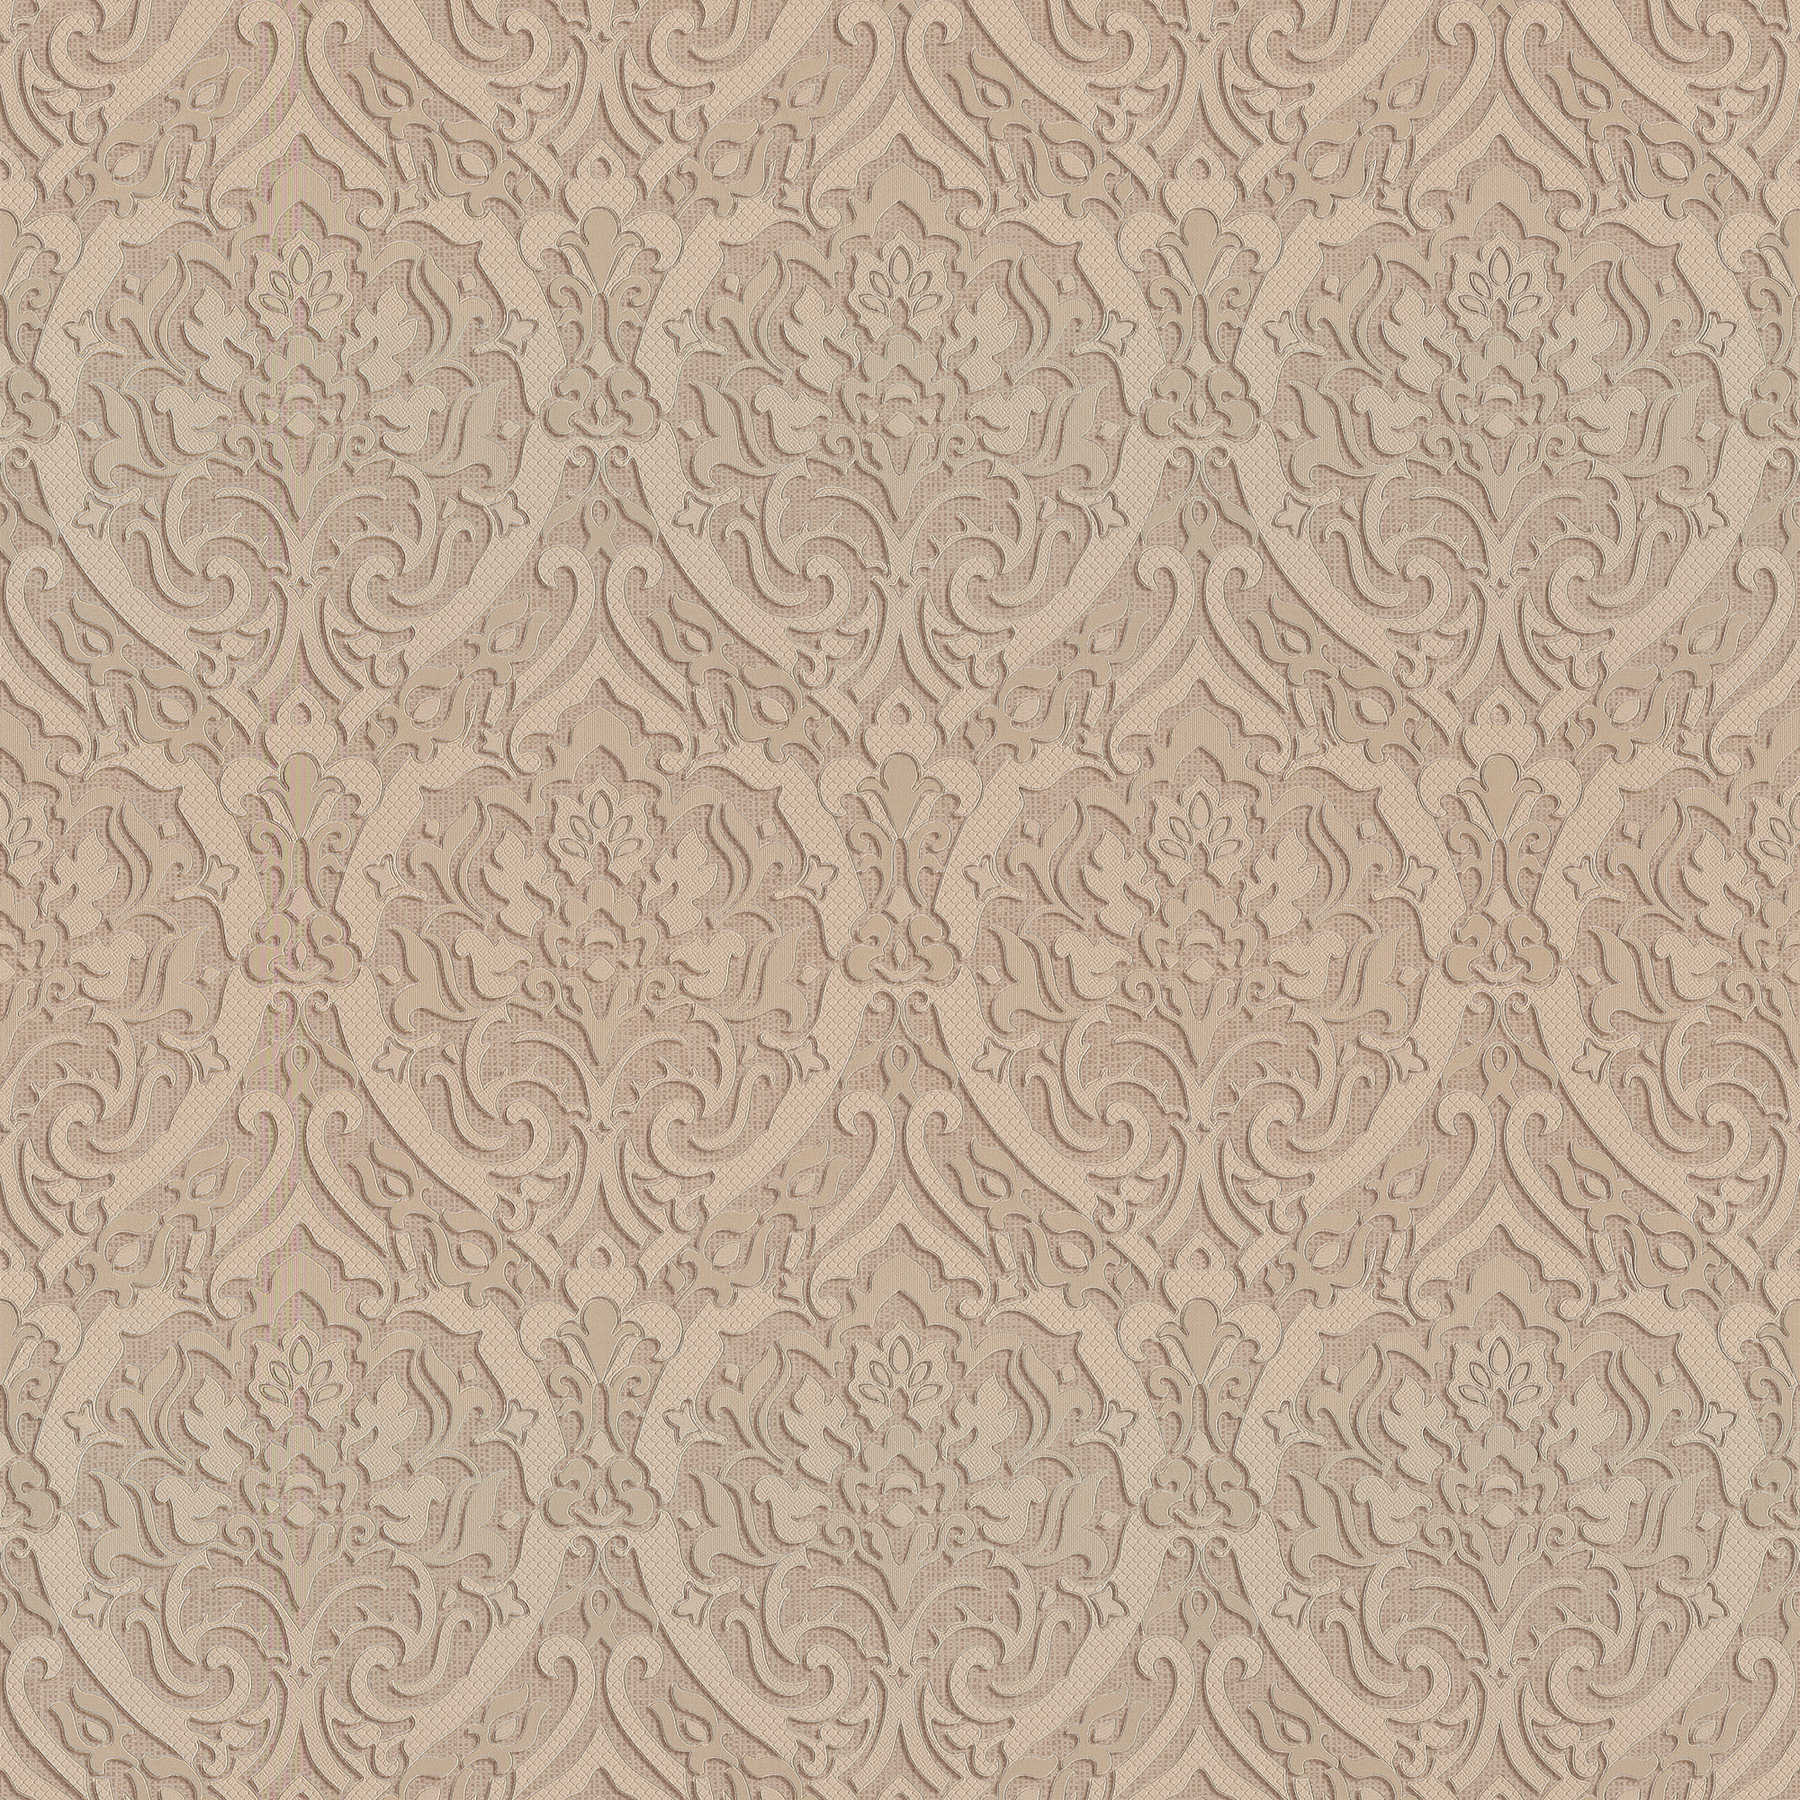             3D Ornament wallpaper, double width 106cm - Brown, Metallic
        